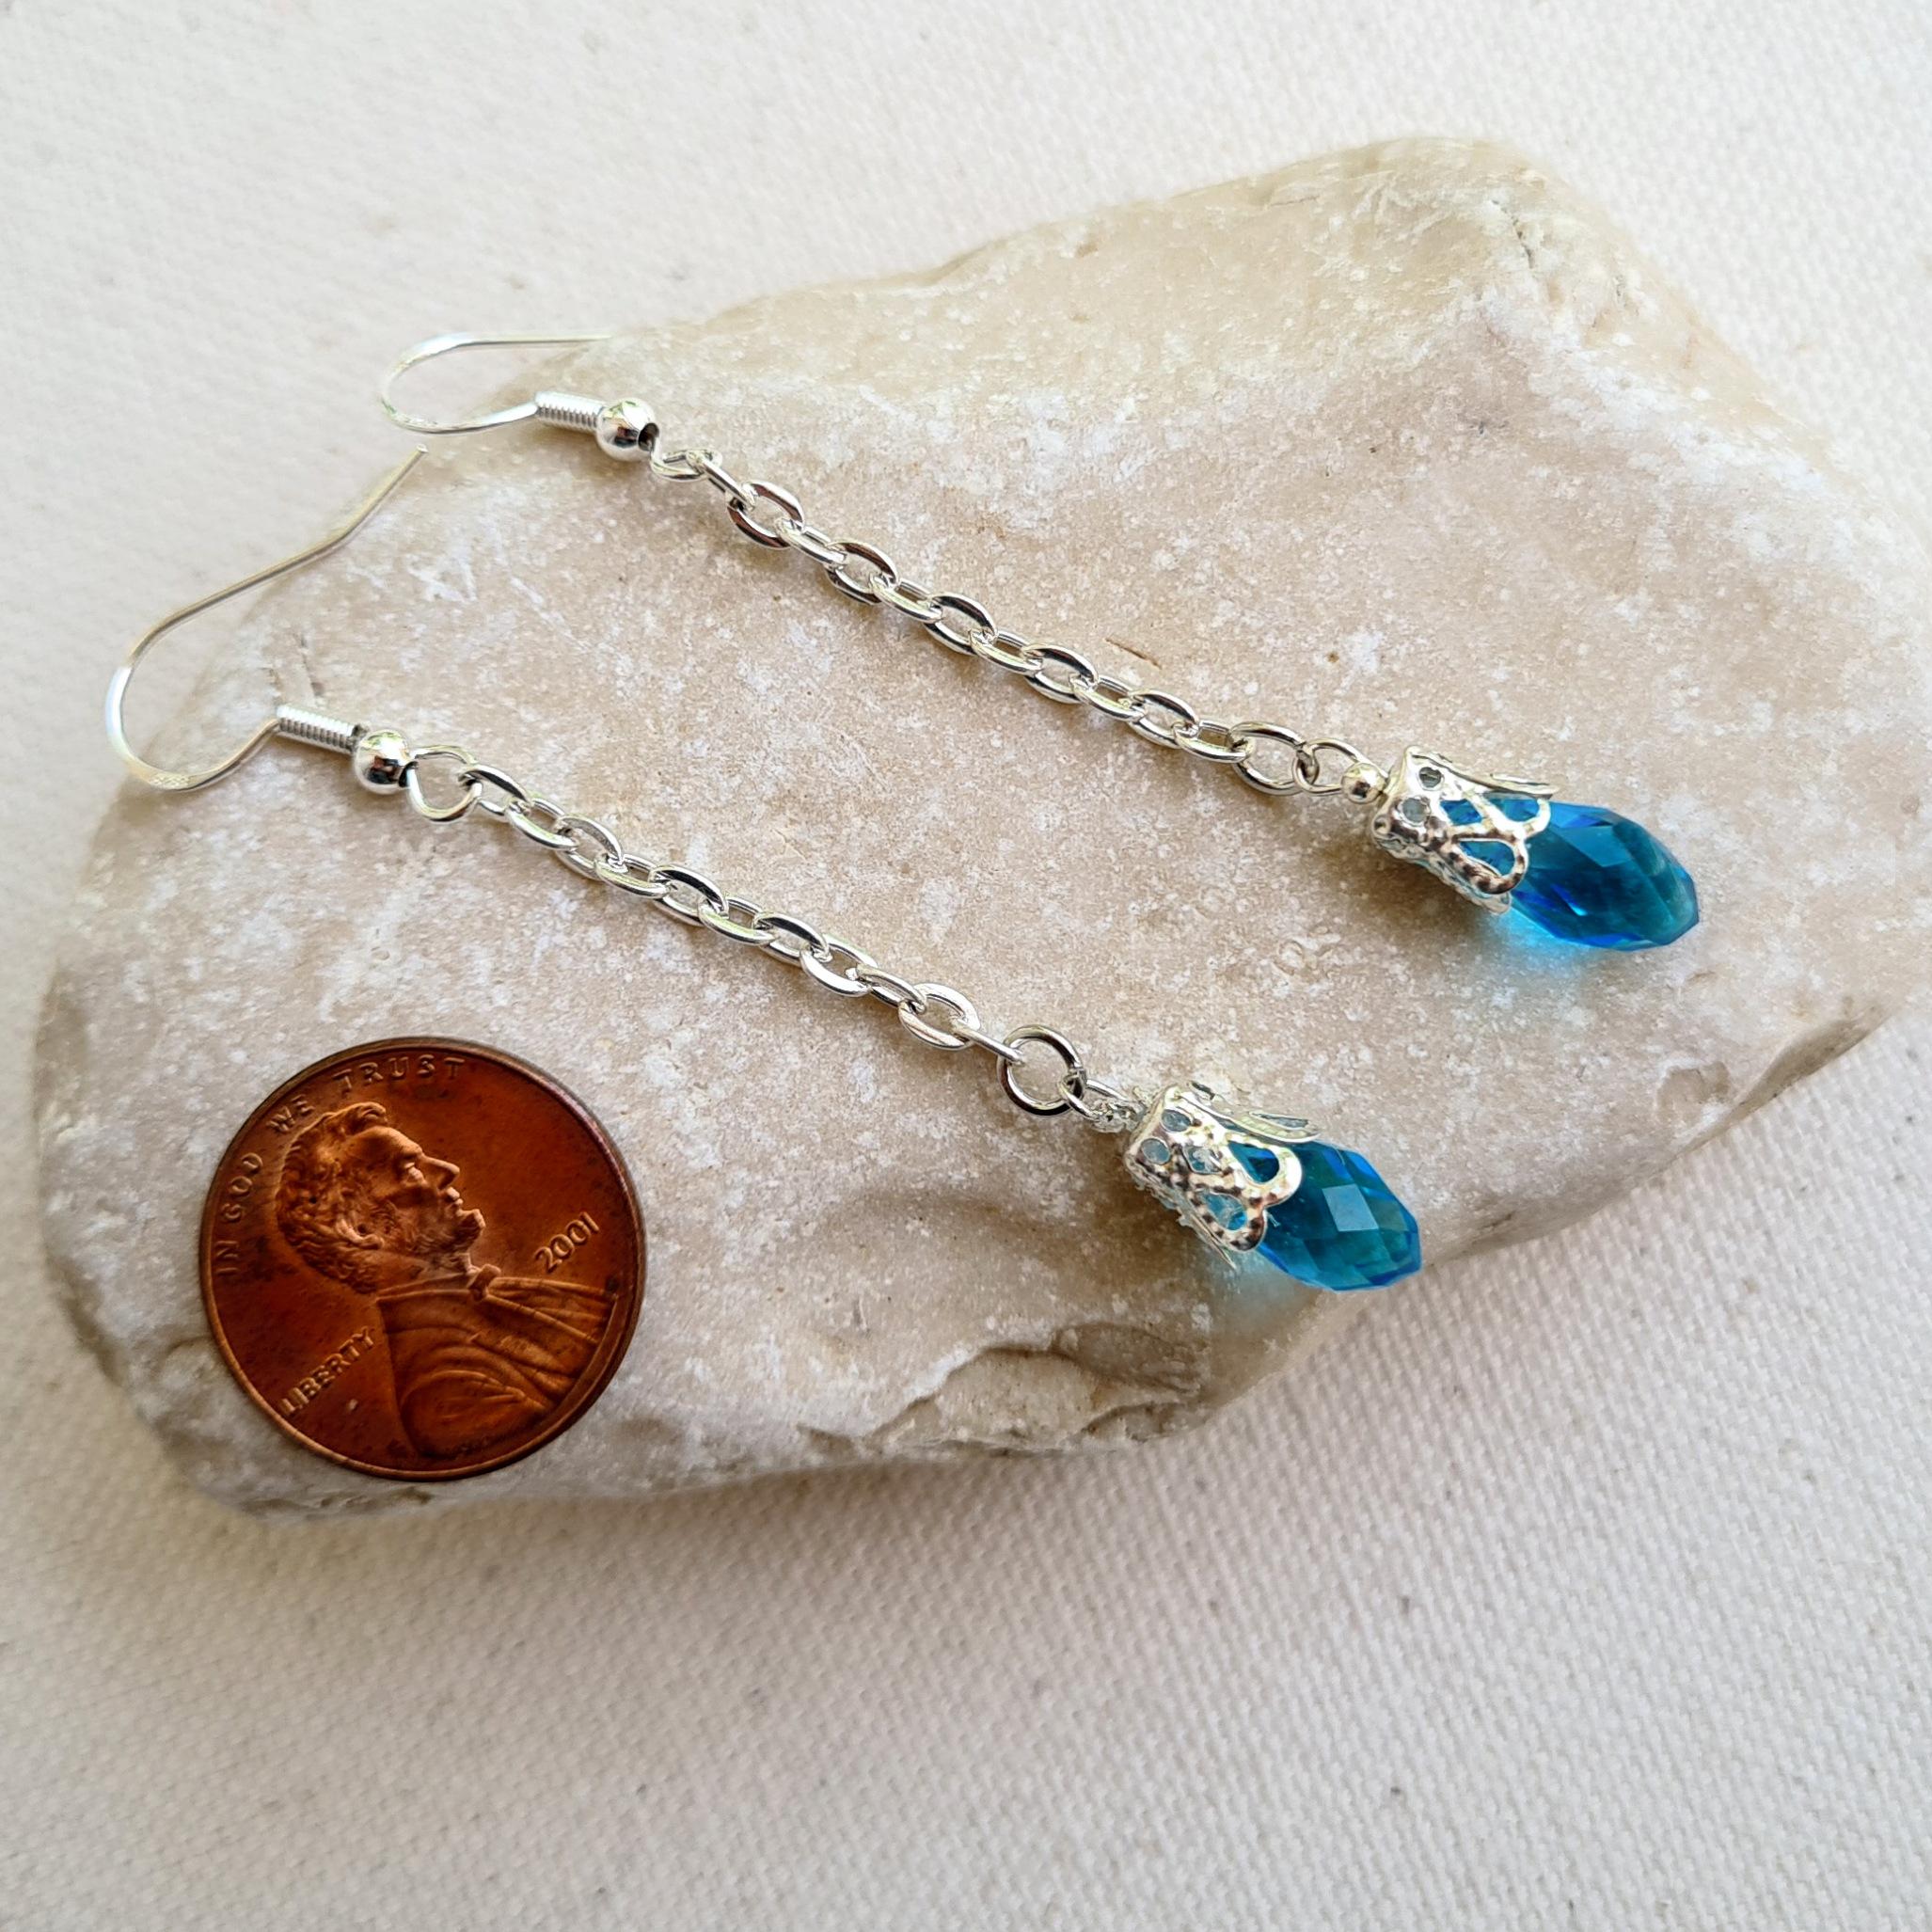 Aqua blue crystal earrings, Long dangle drop earrings, Long chandelier earrings, Teardrop earrings, Blue and silver earrings